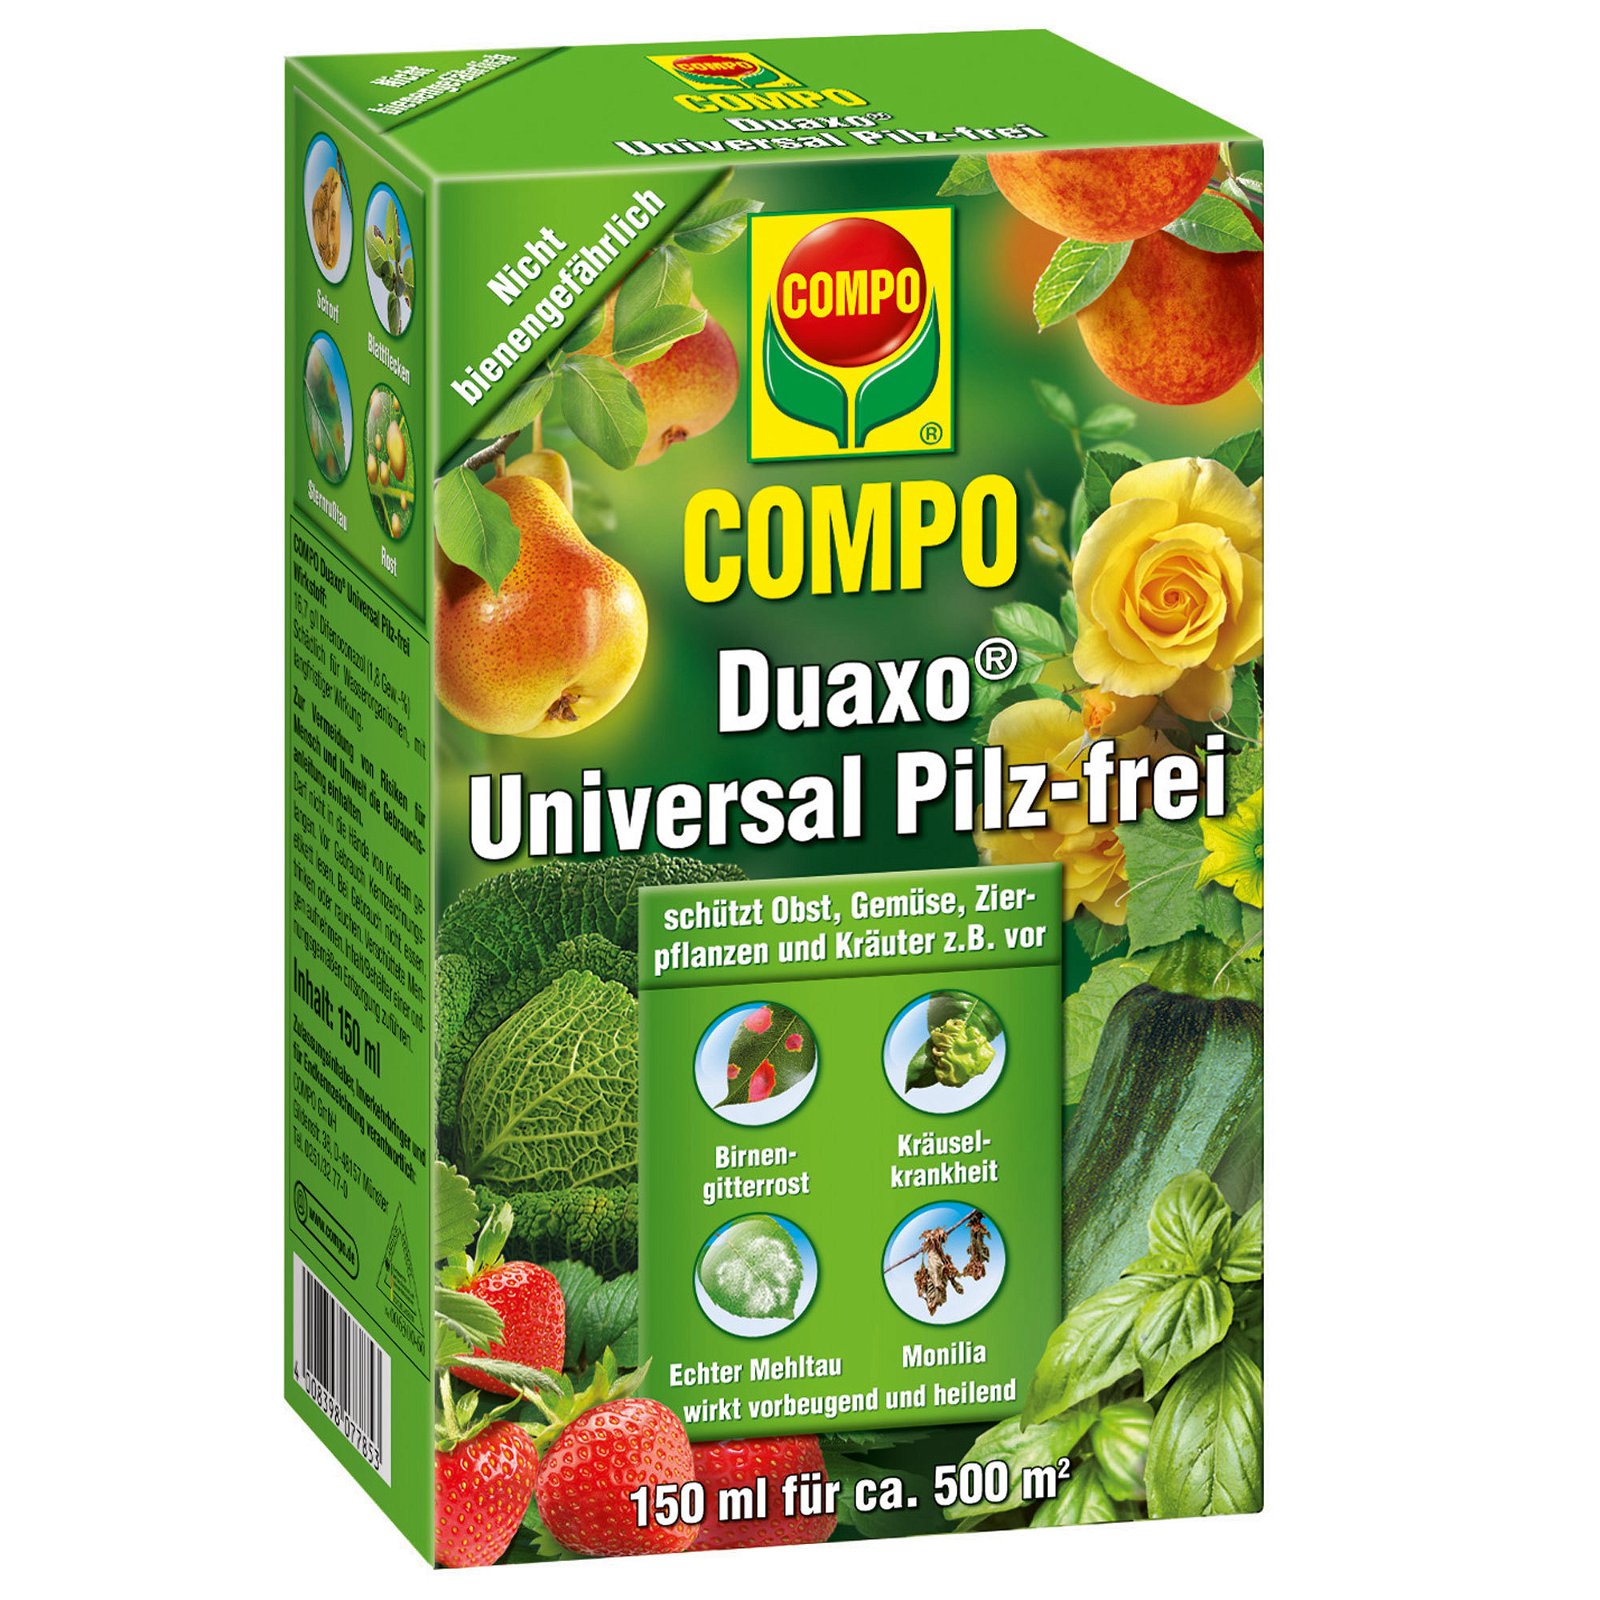 Compo Duaxo Universal Pilzfrei, 150 ml